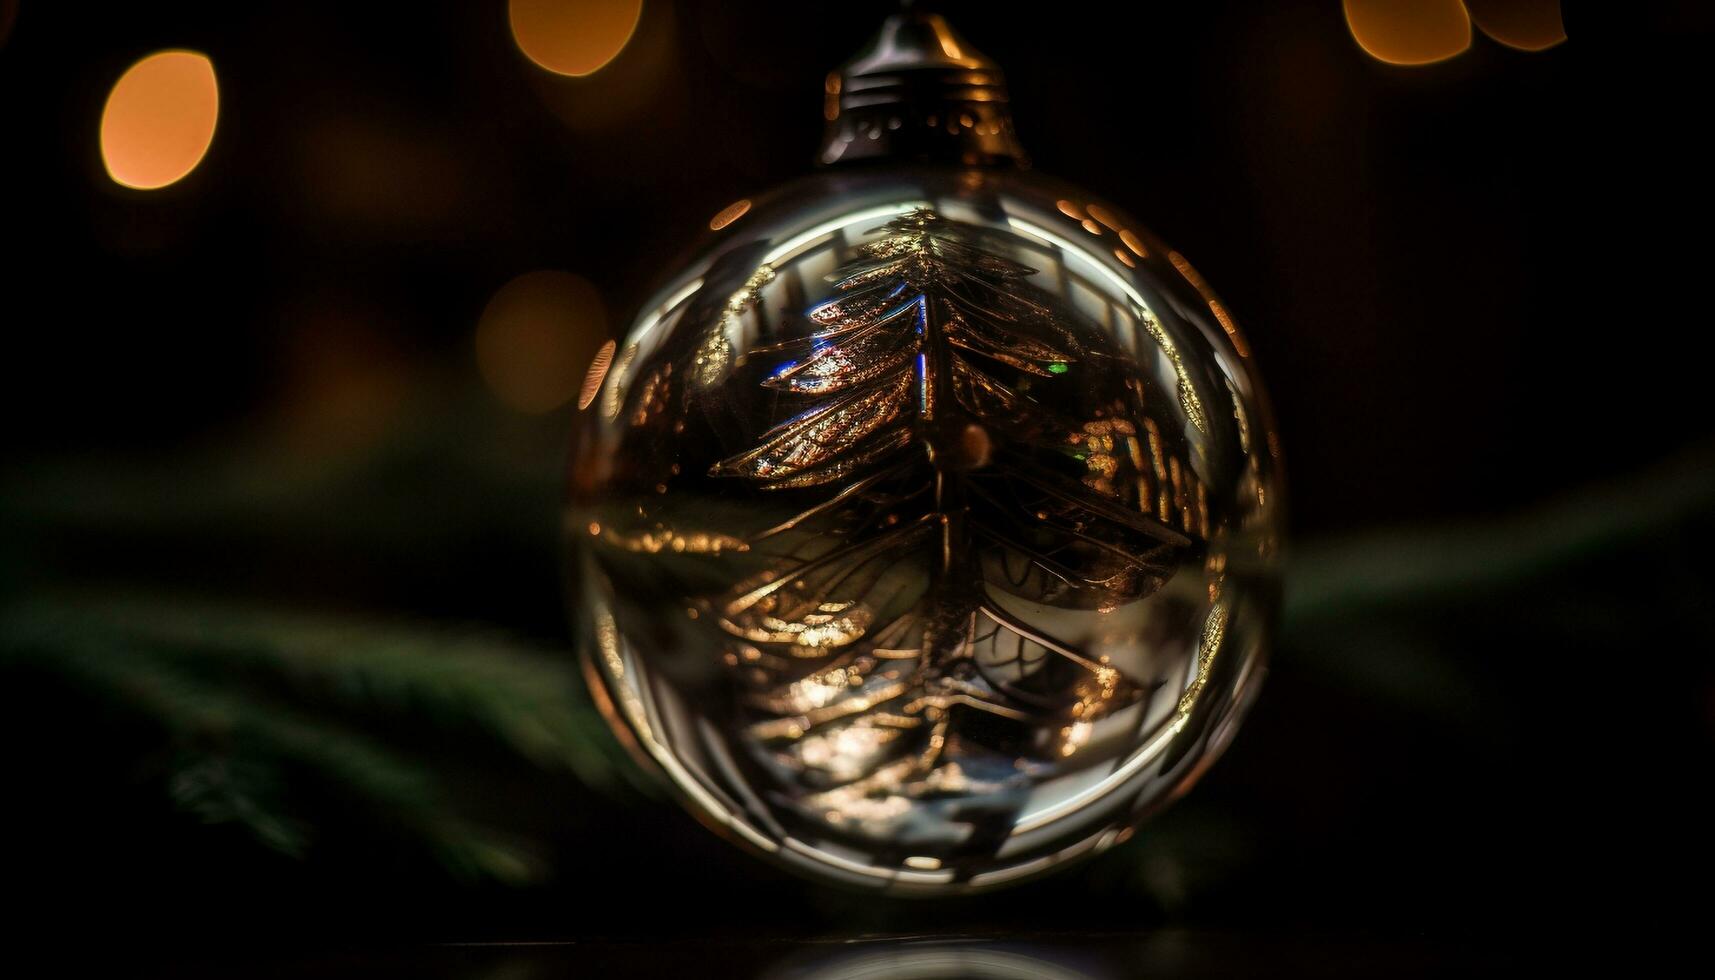 Shiny glass reflects glowing Christmas lights at night generated by AI photo